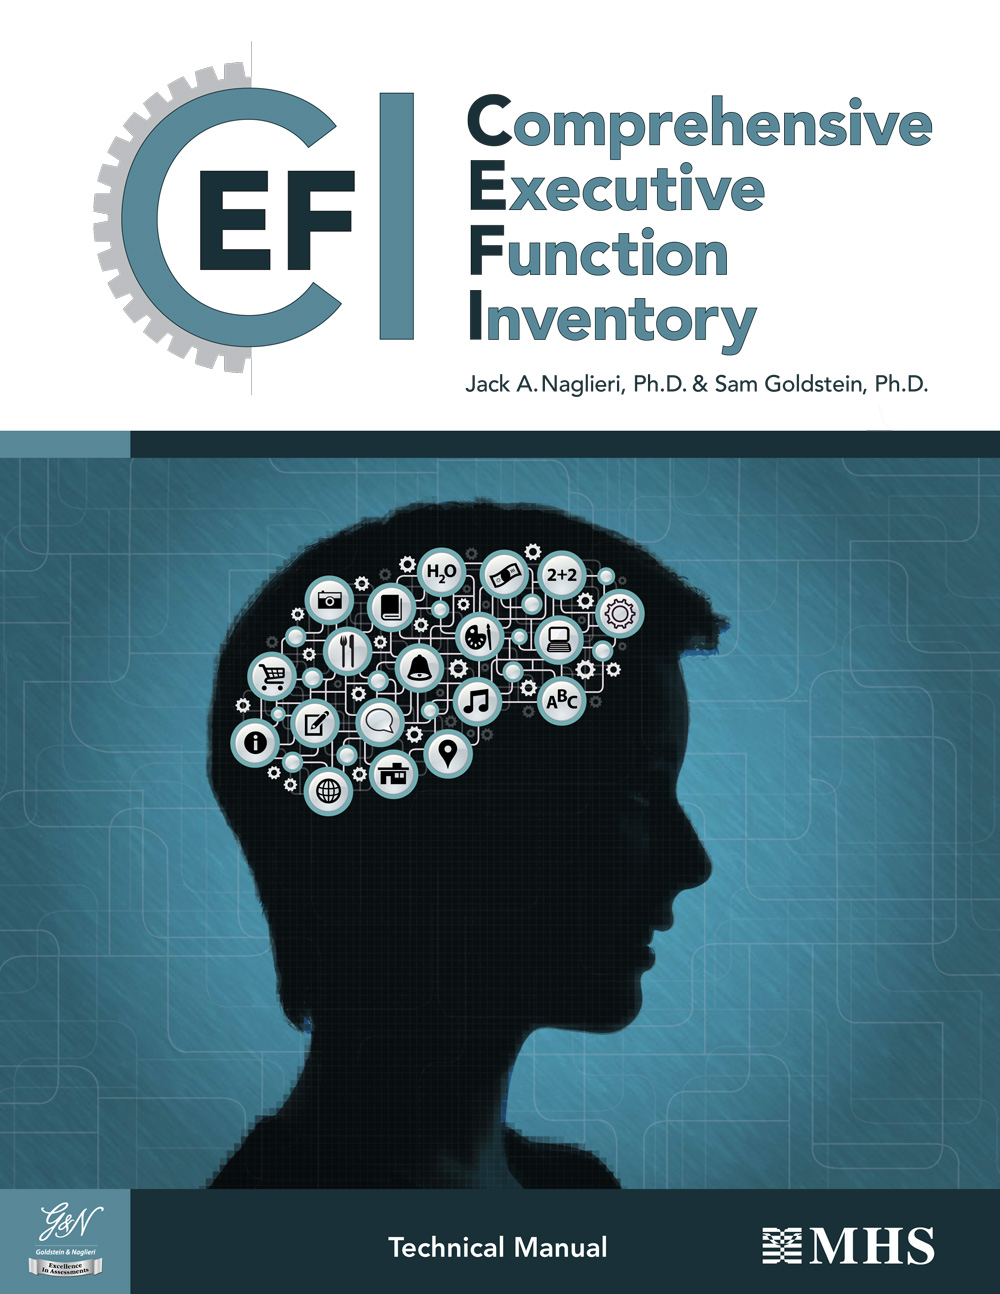 Comprehensive Executive Function Inventory (CEFI)